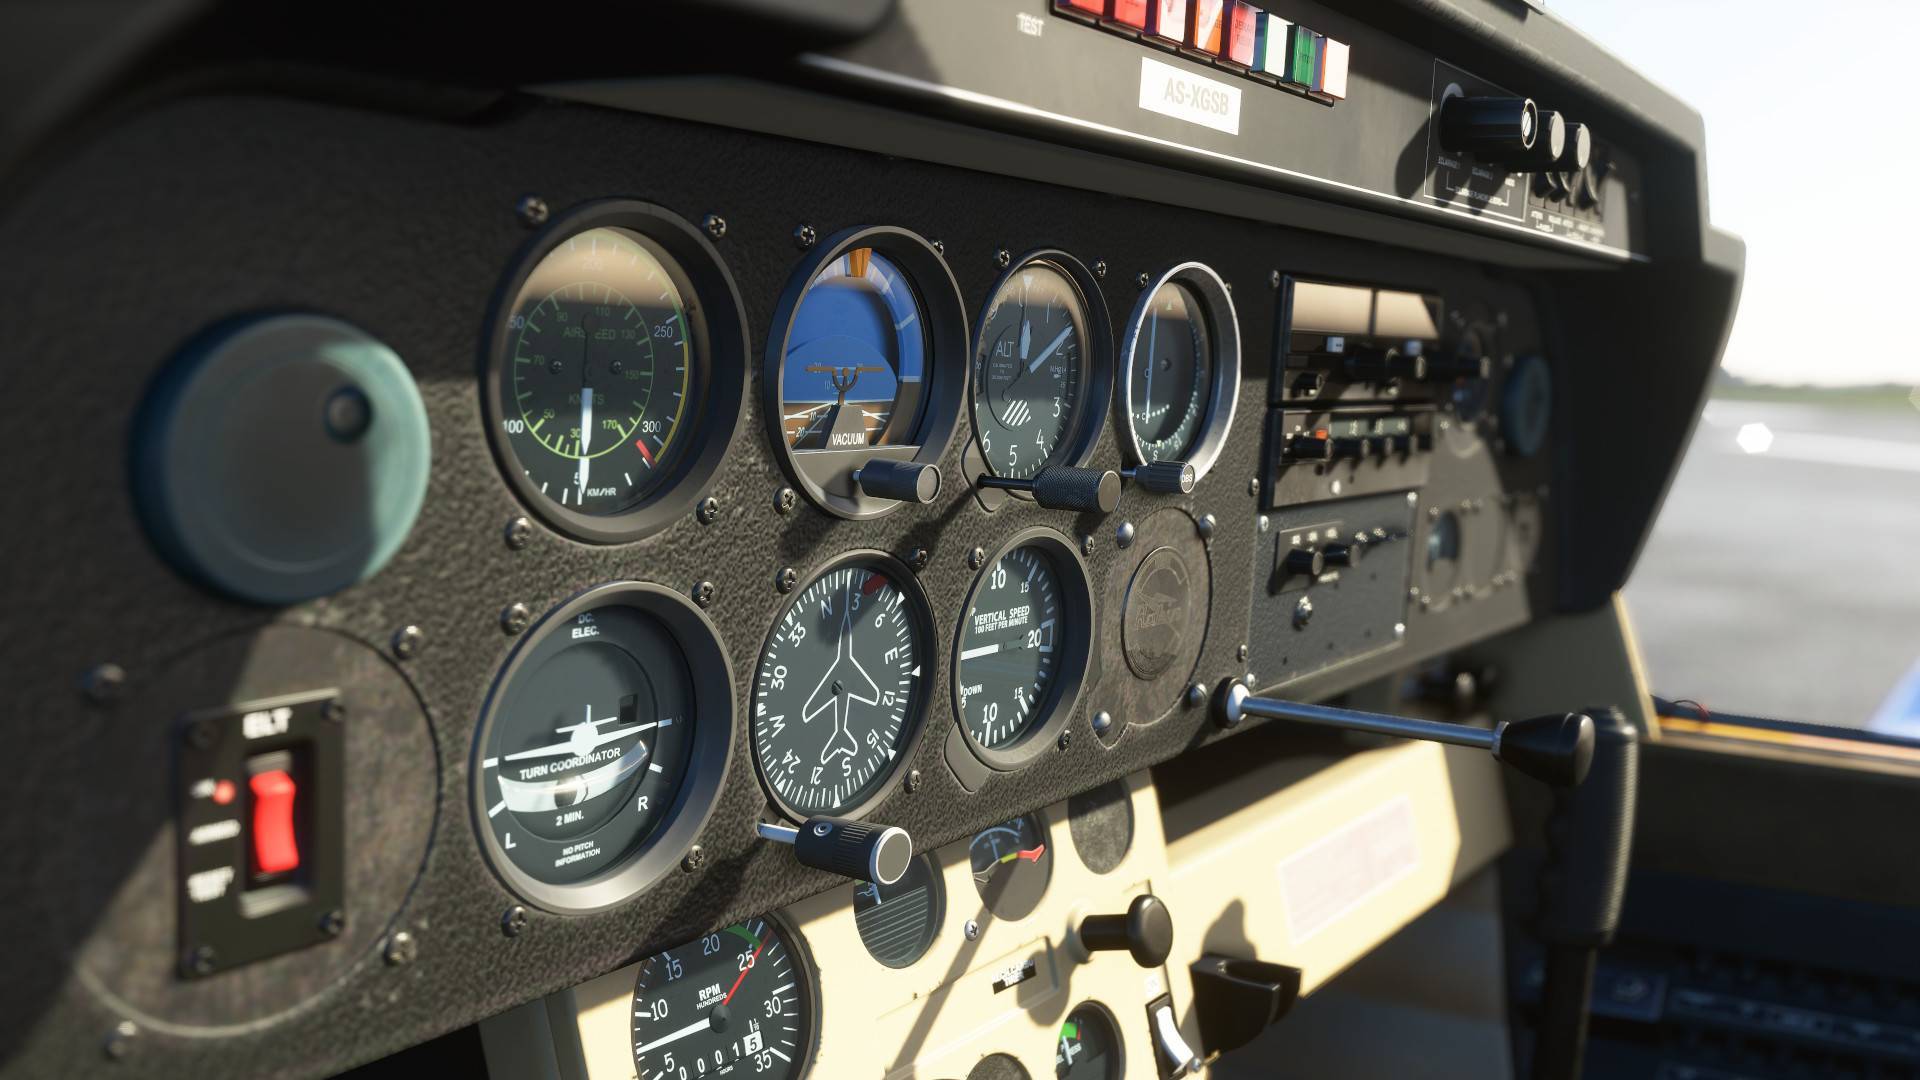 Microsoft Flight Simulator Xbox File Size Nears 100GB